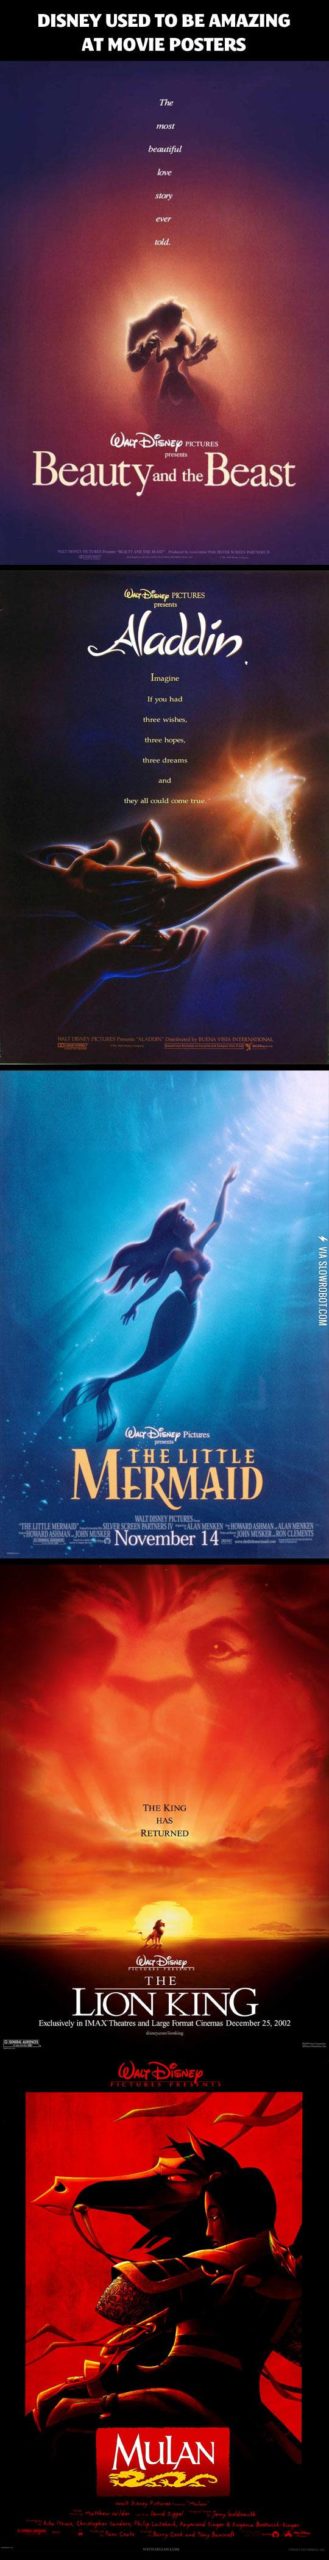 Classic+Disney+movie+posters.